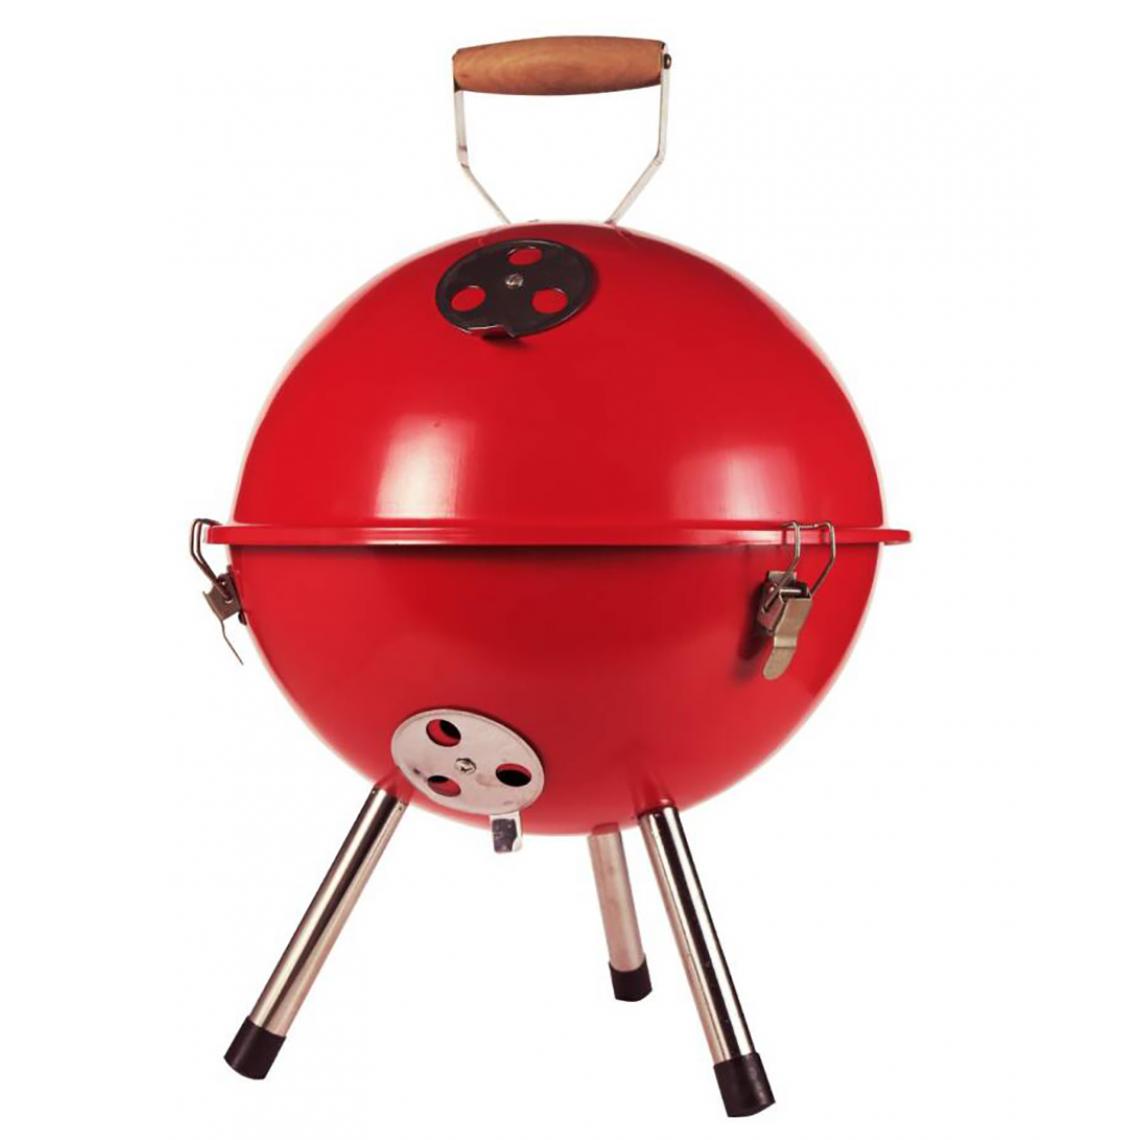 Pegane - Barbecue en acier coloris rouge - Ø 35.5 x Hauteur 46 cm - Barbecues gaz